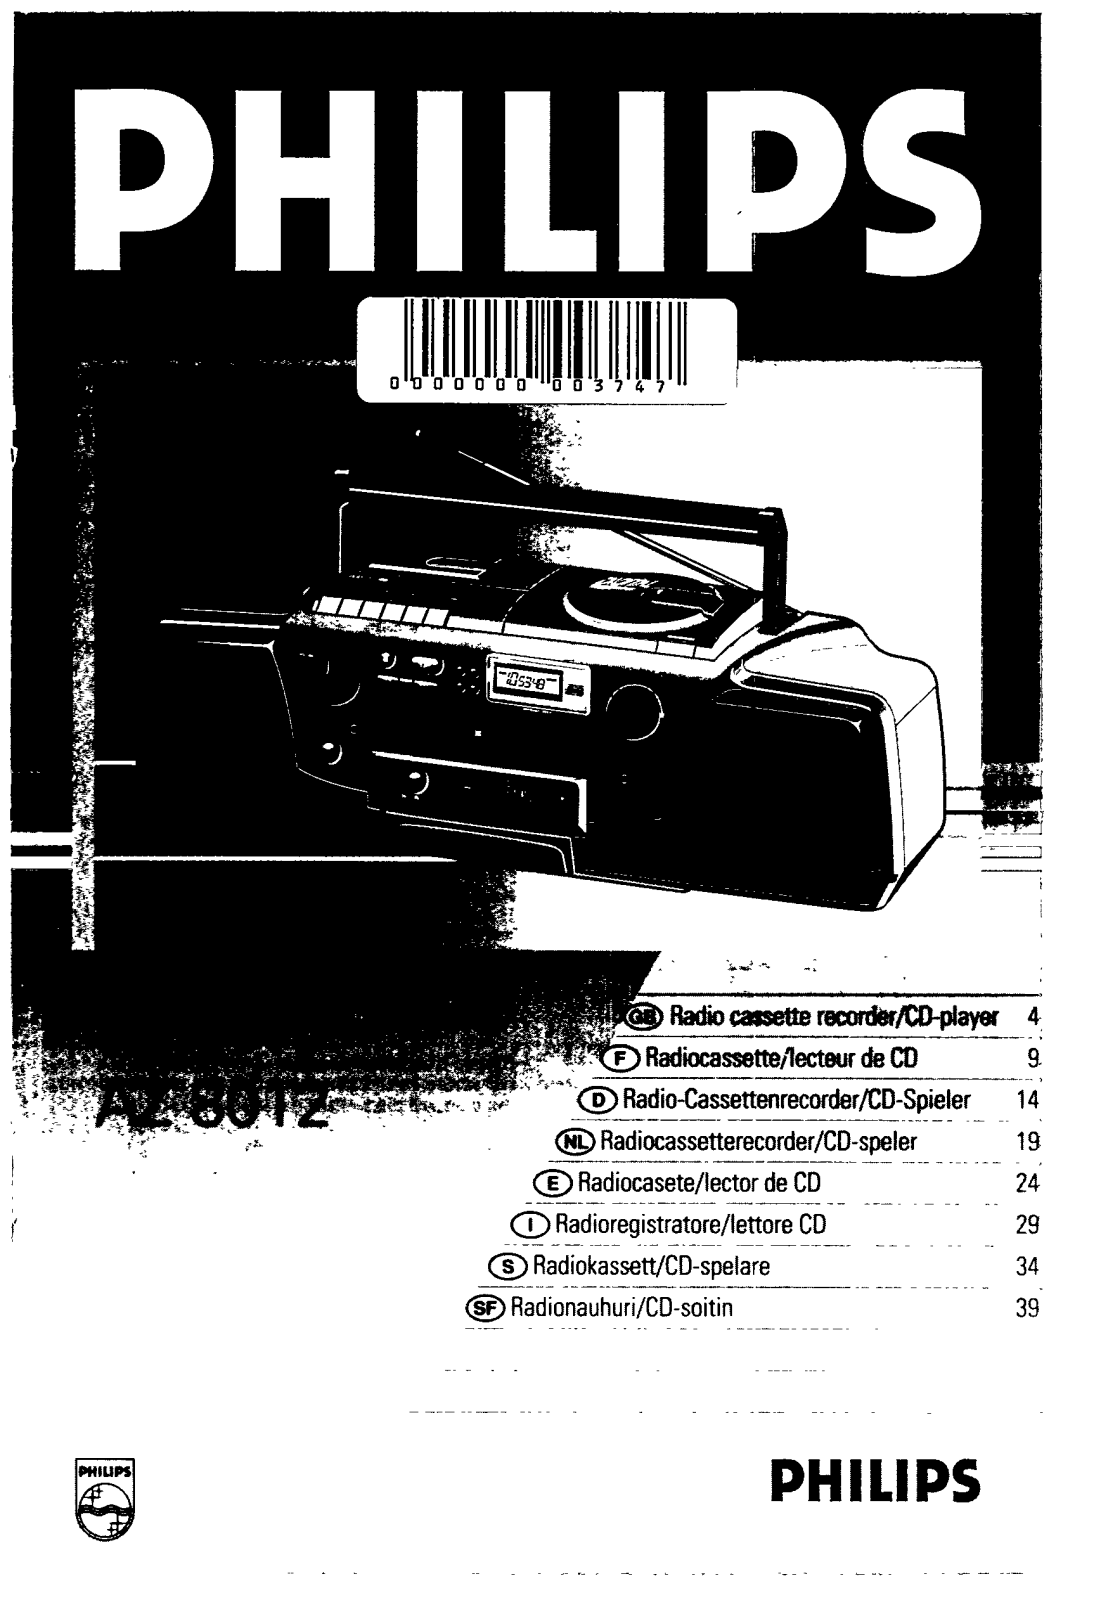 Philips AZ8012 User Manual